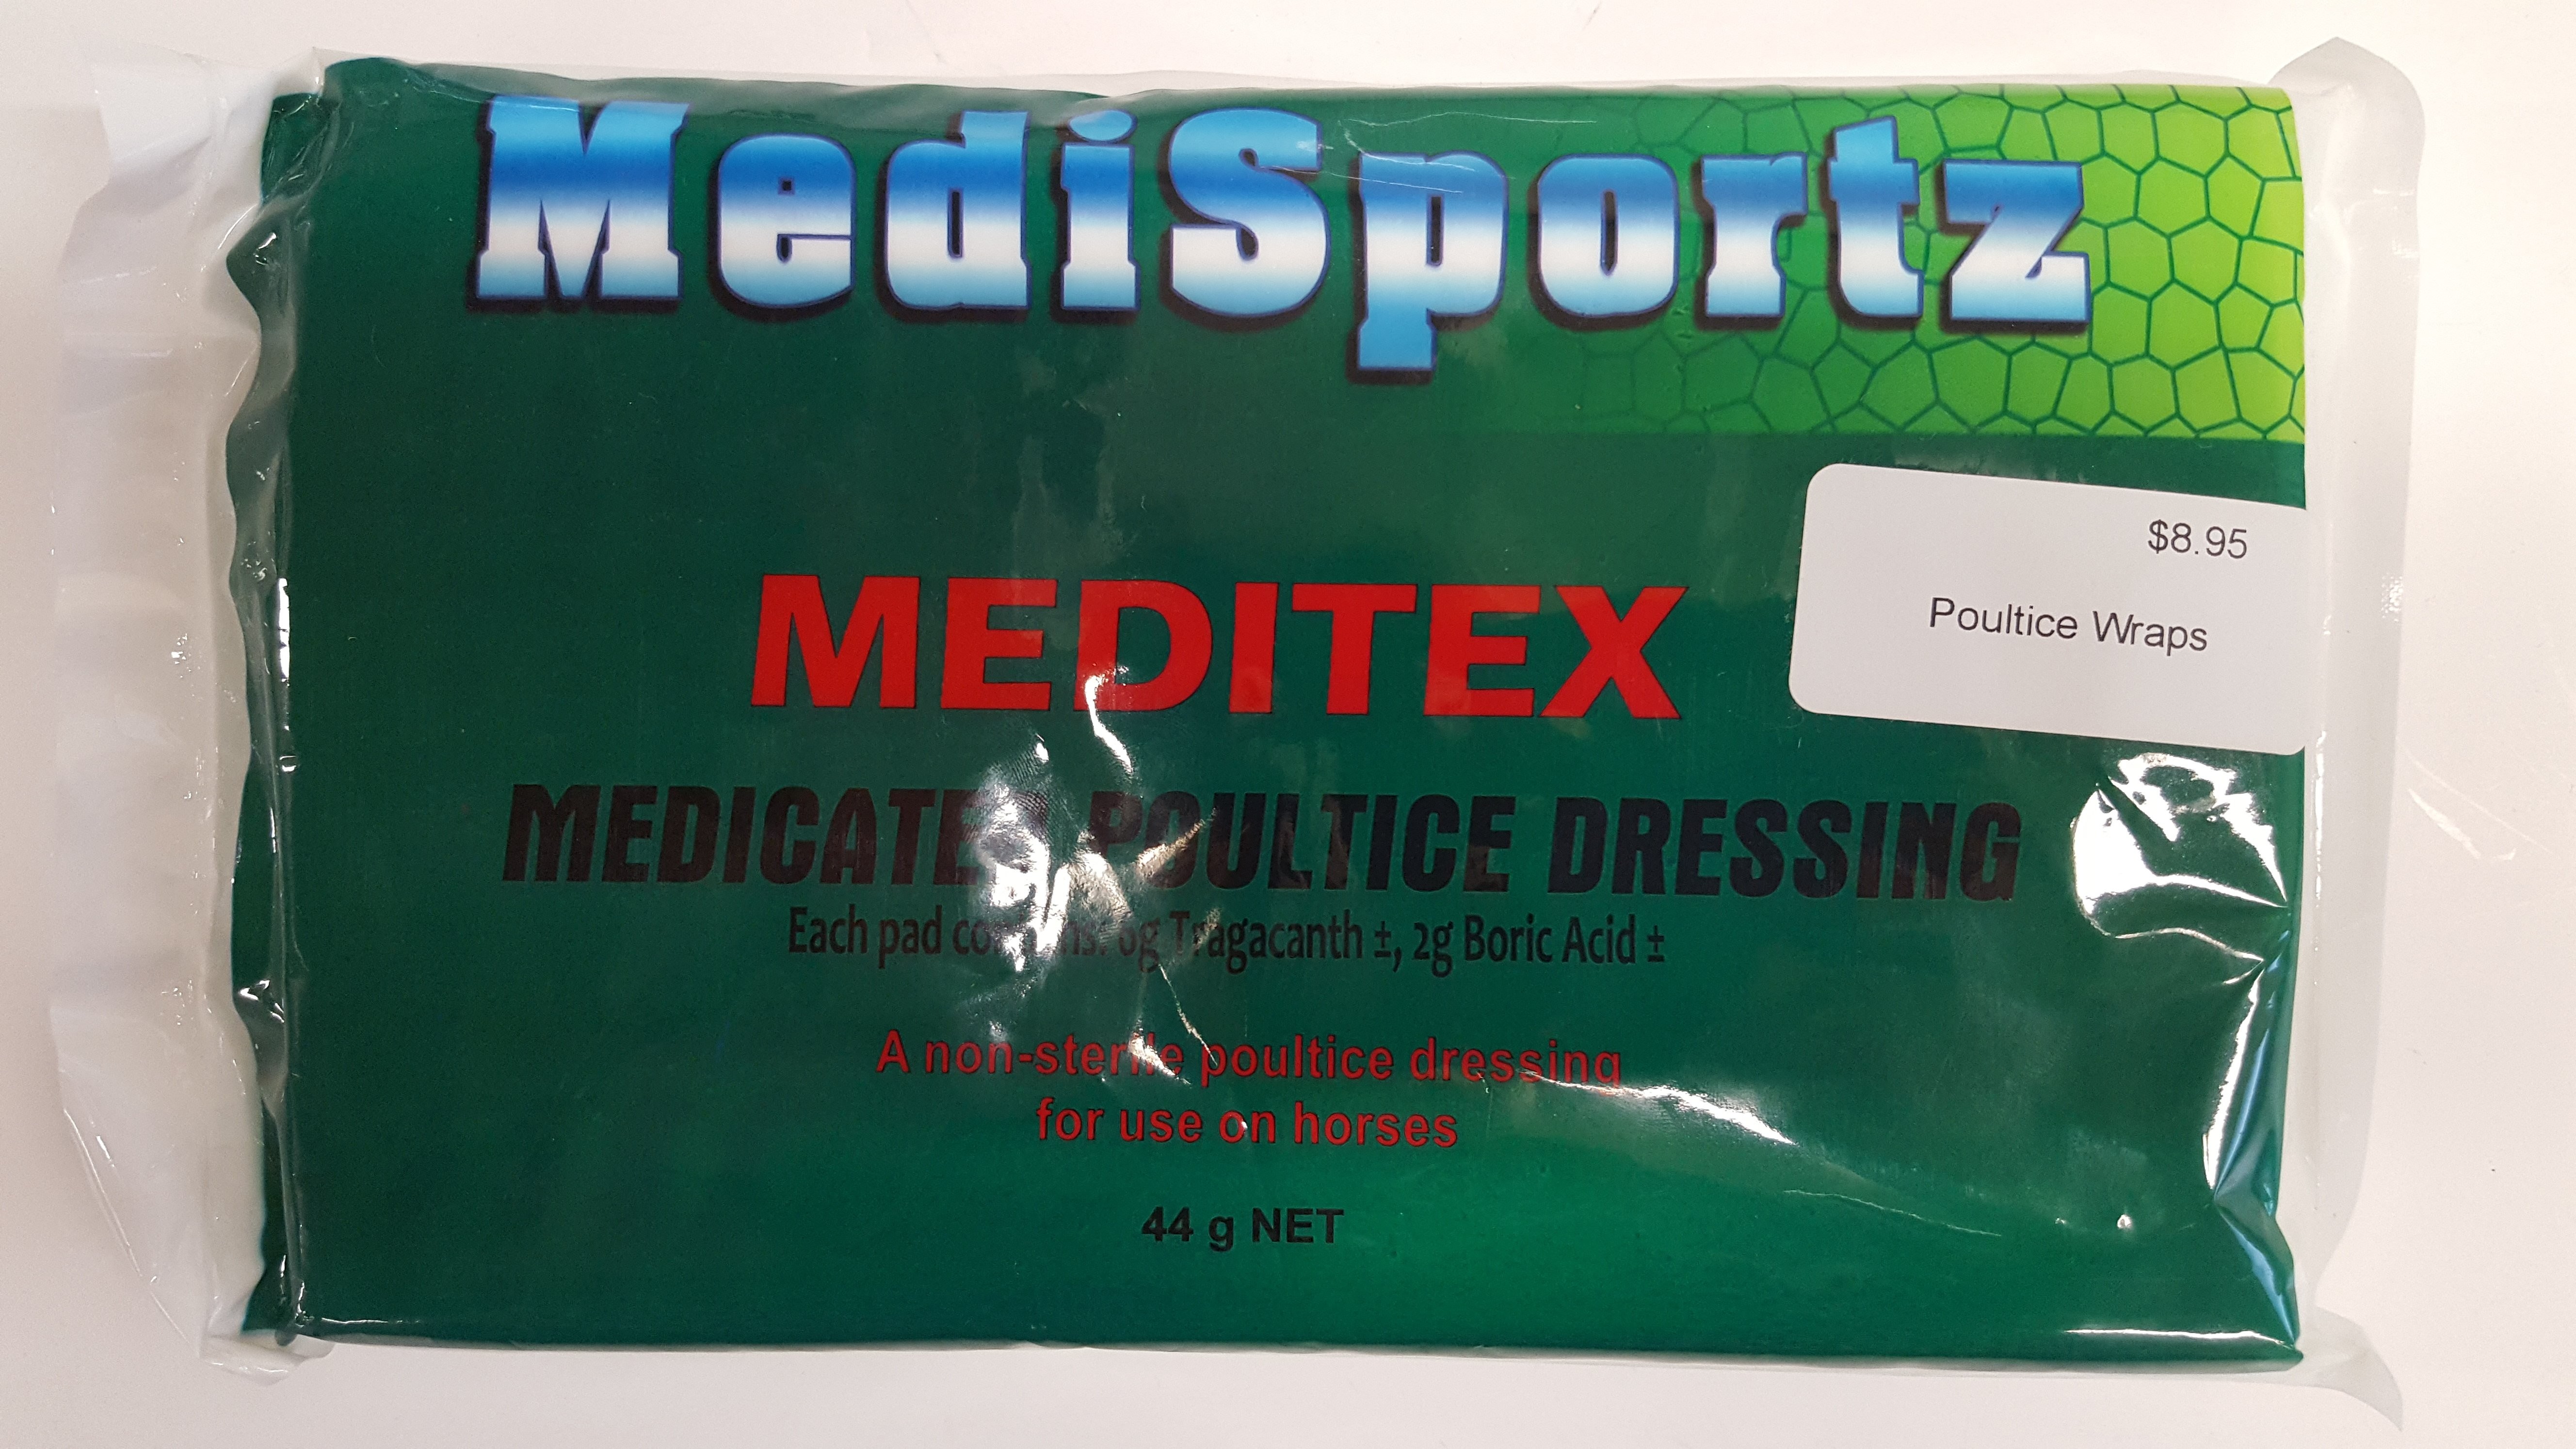 MEDISPORTZ MEDITEX POULTICE DRESSING 